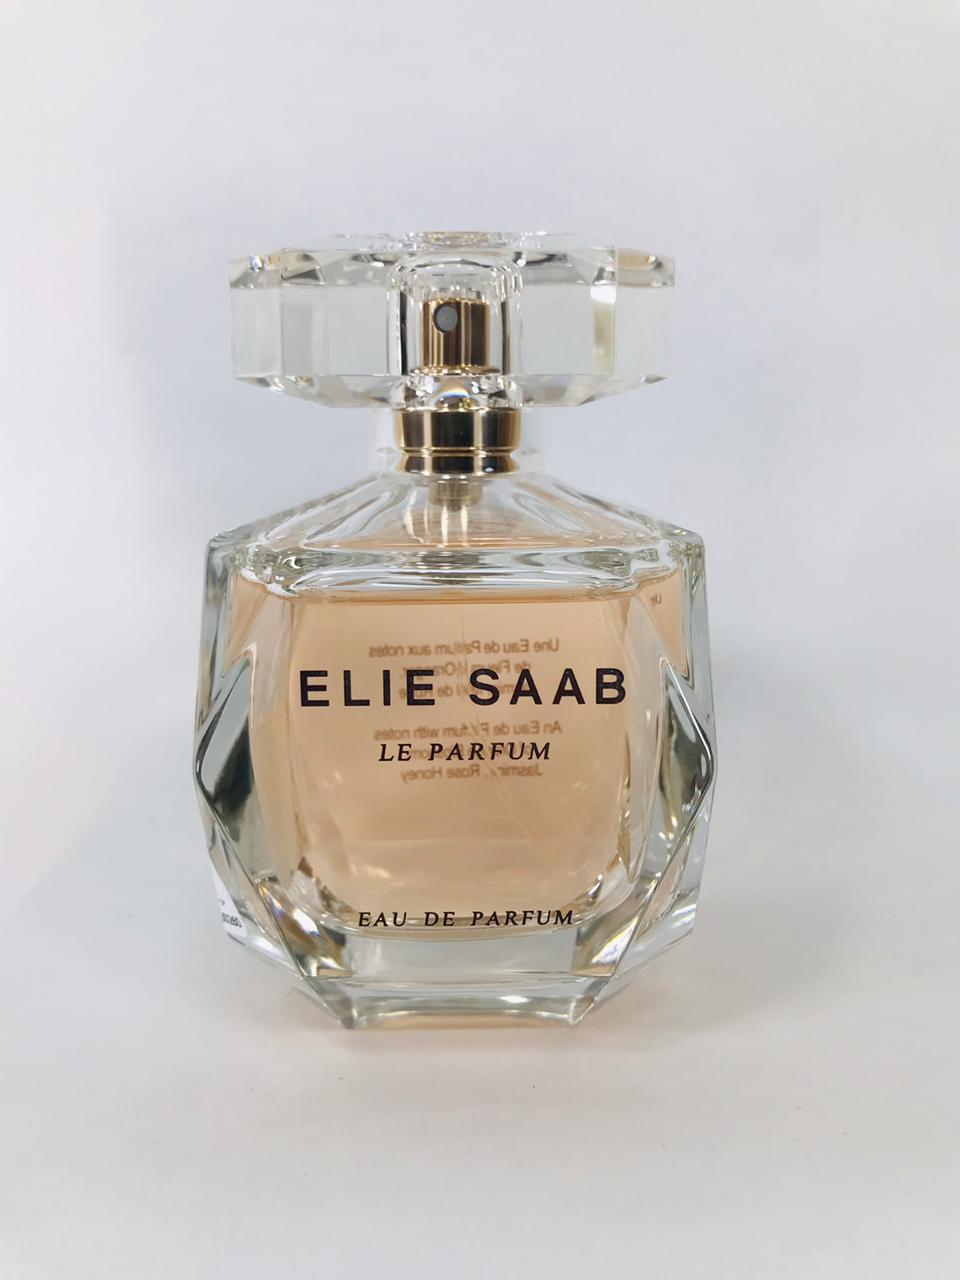 Le Parfum   Elie Saab  Eau de Parfum Feminino  90ml – Tester